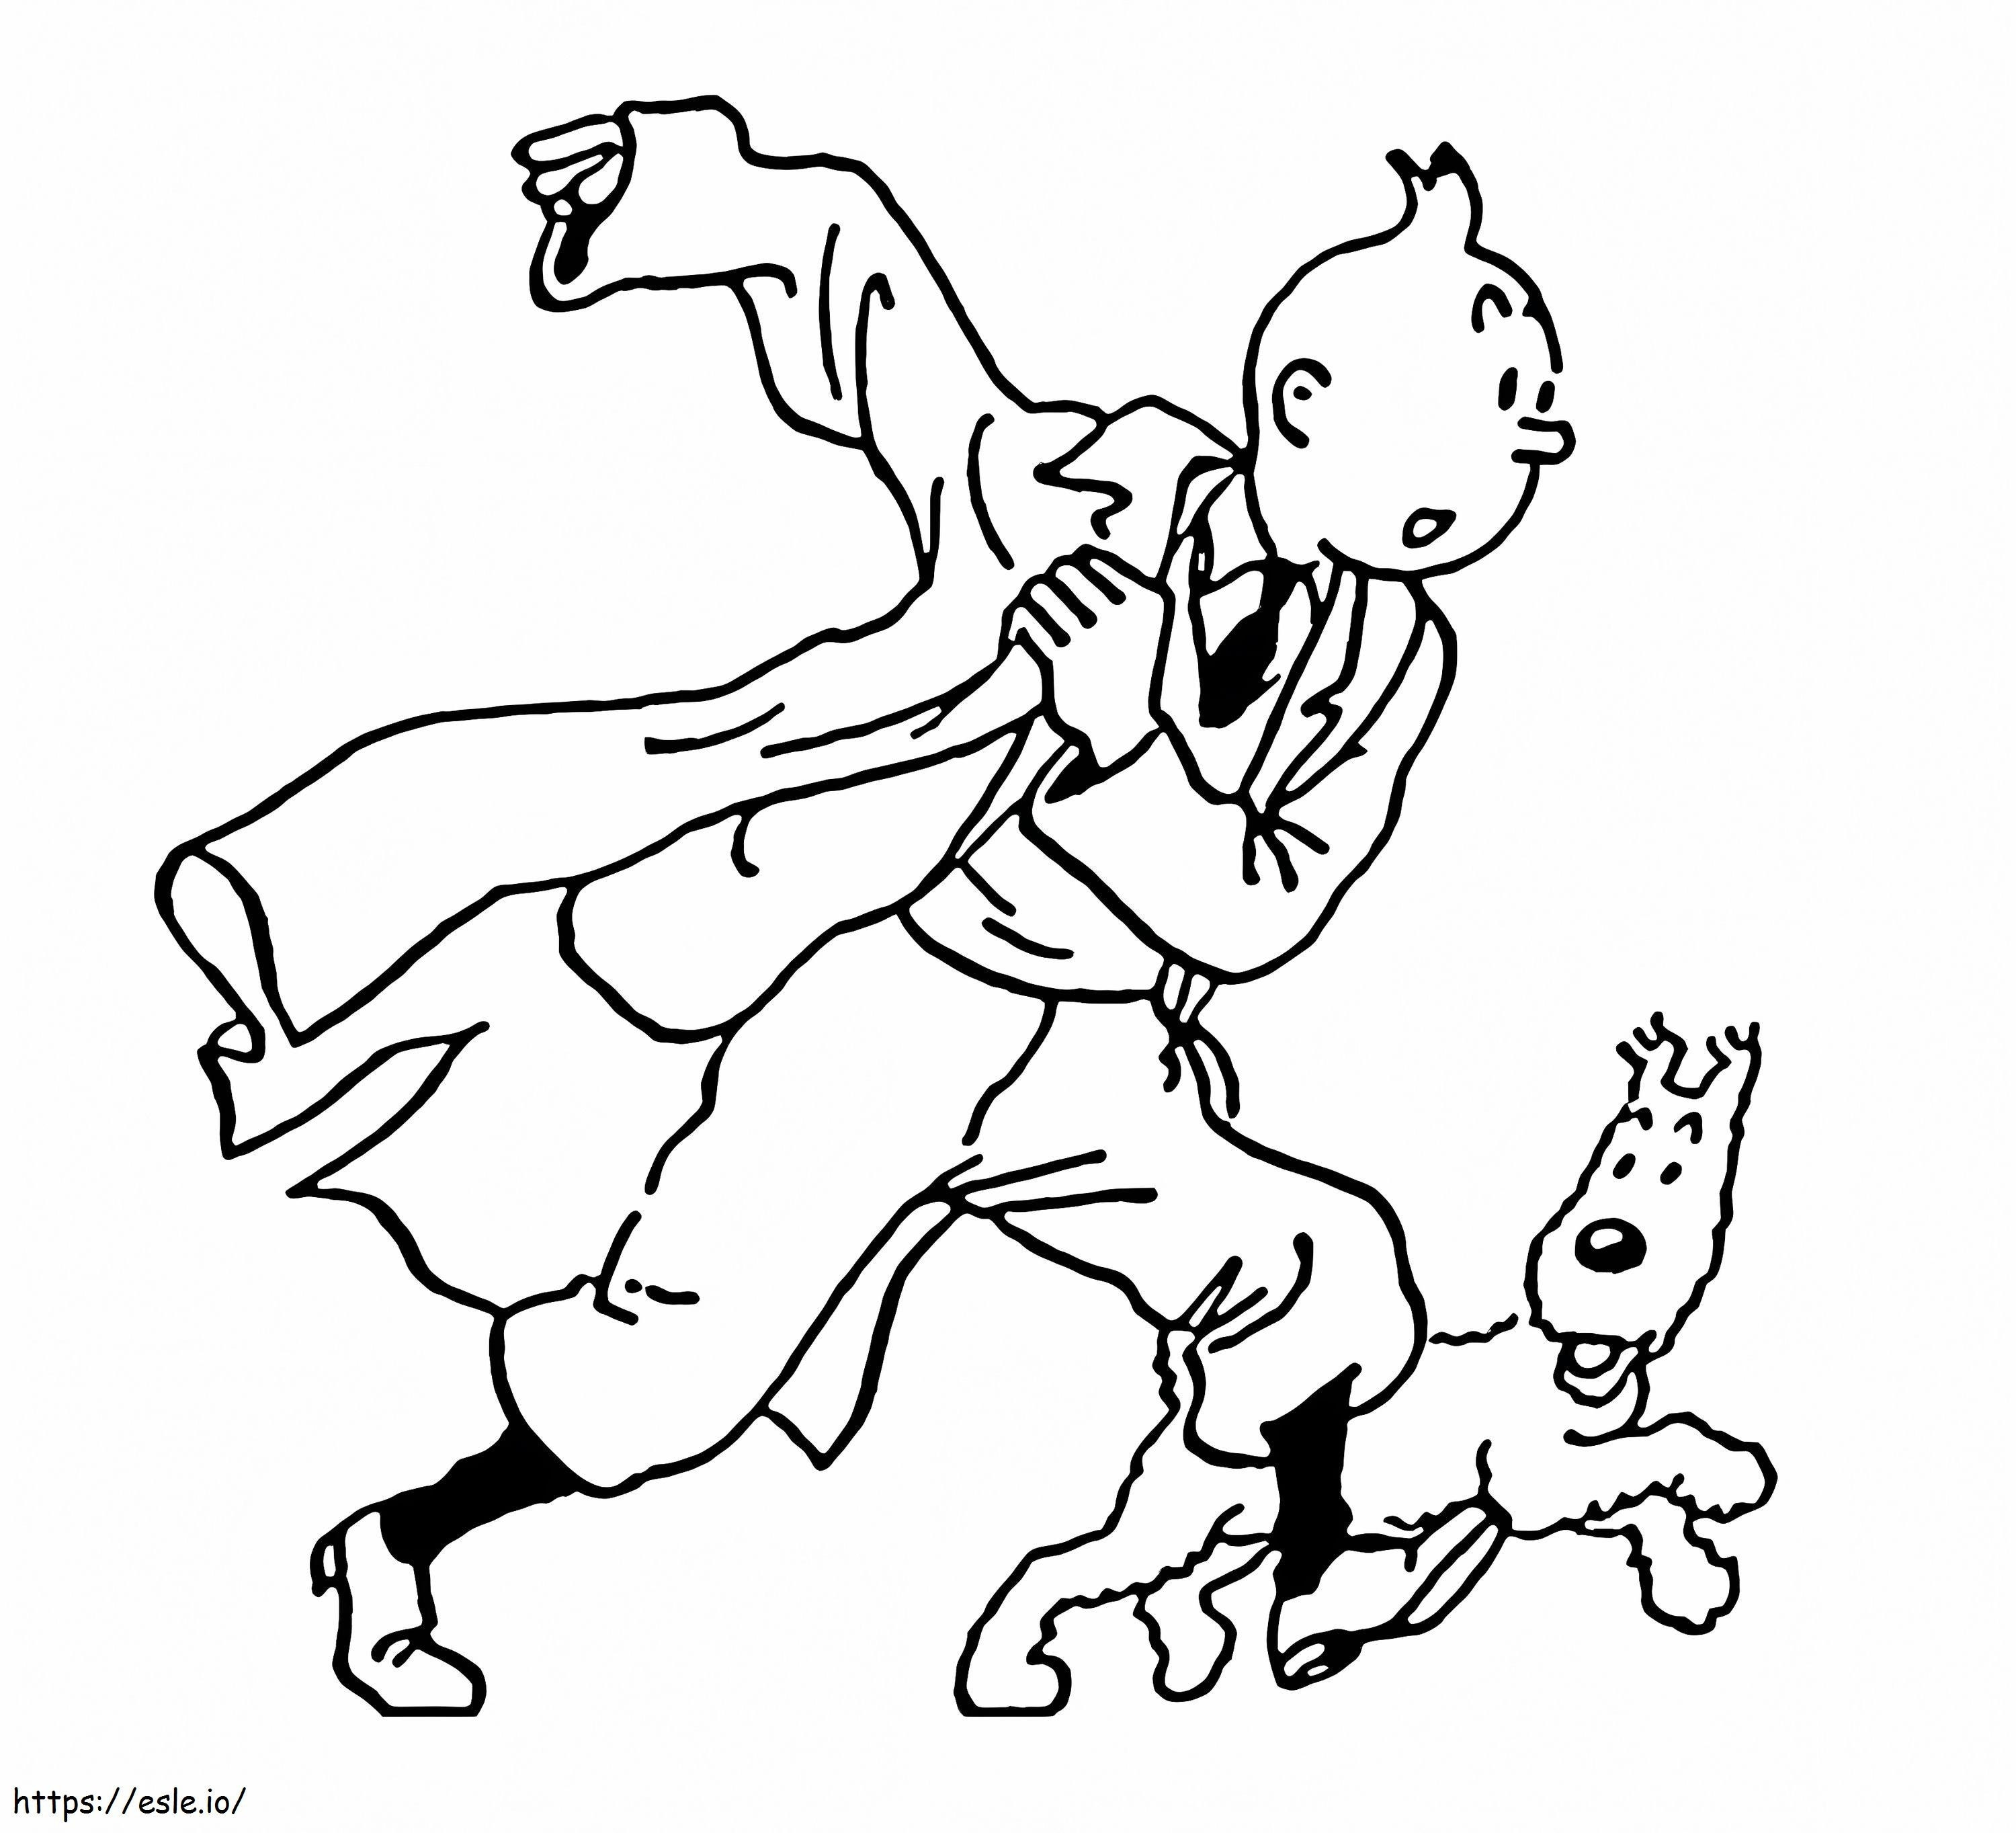 Tintin Dan Lari Bersalju Gambar Mewarnai